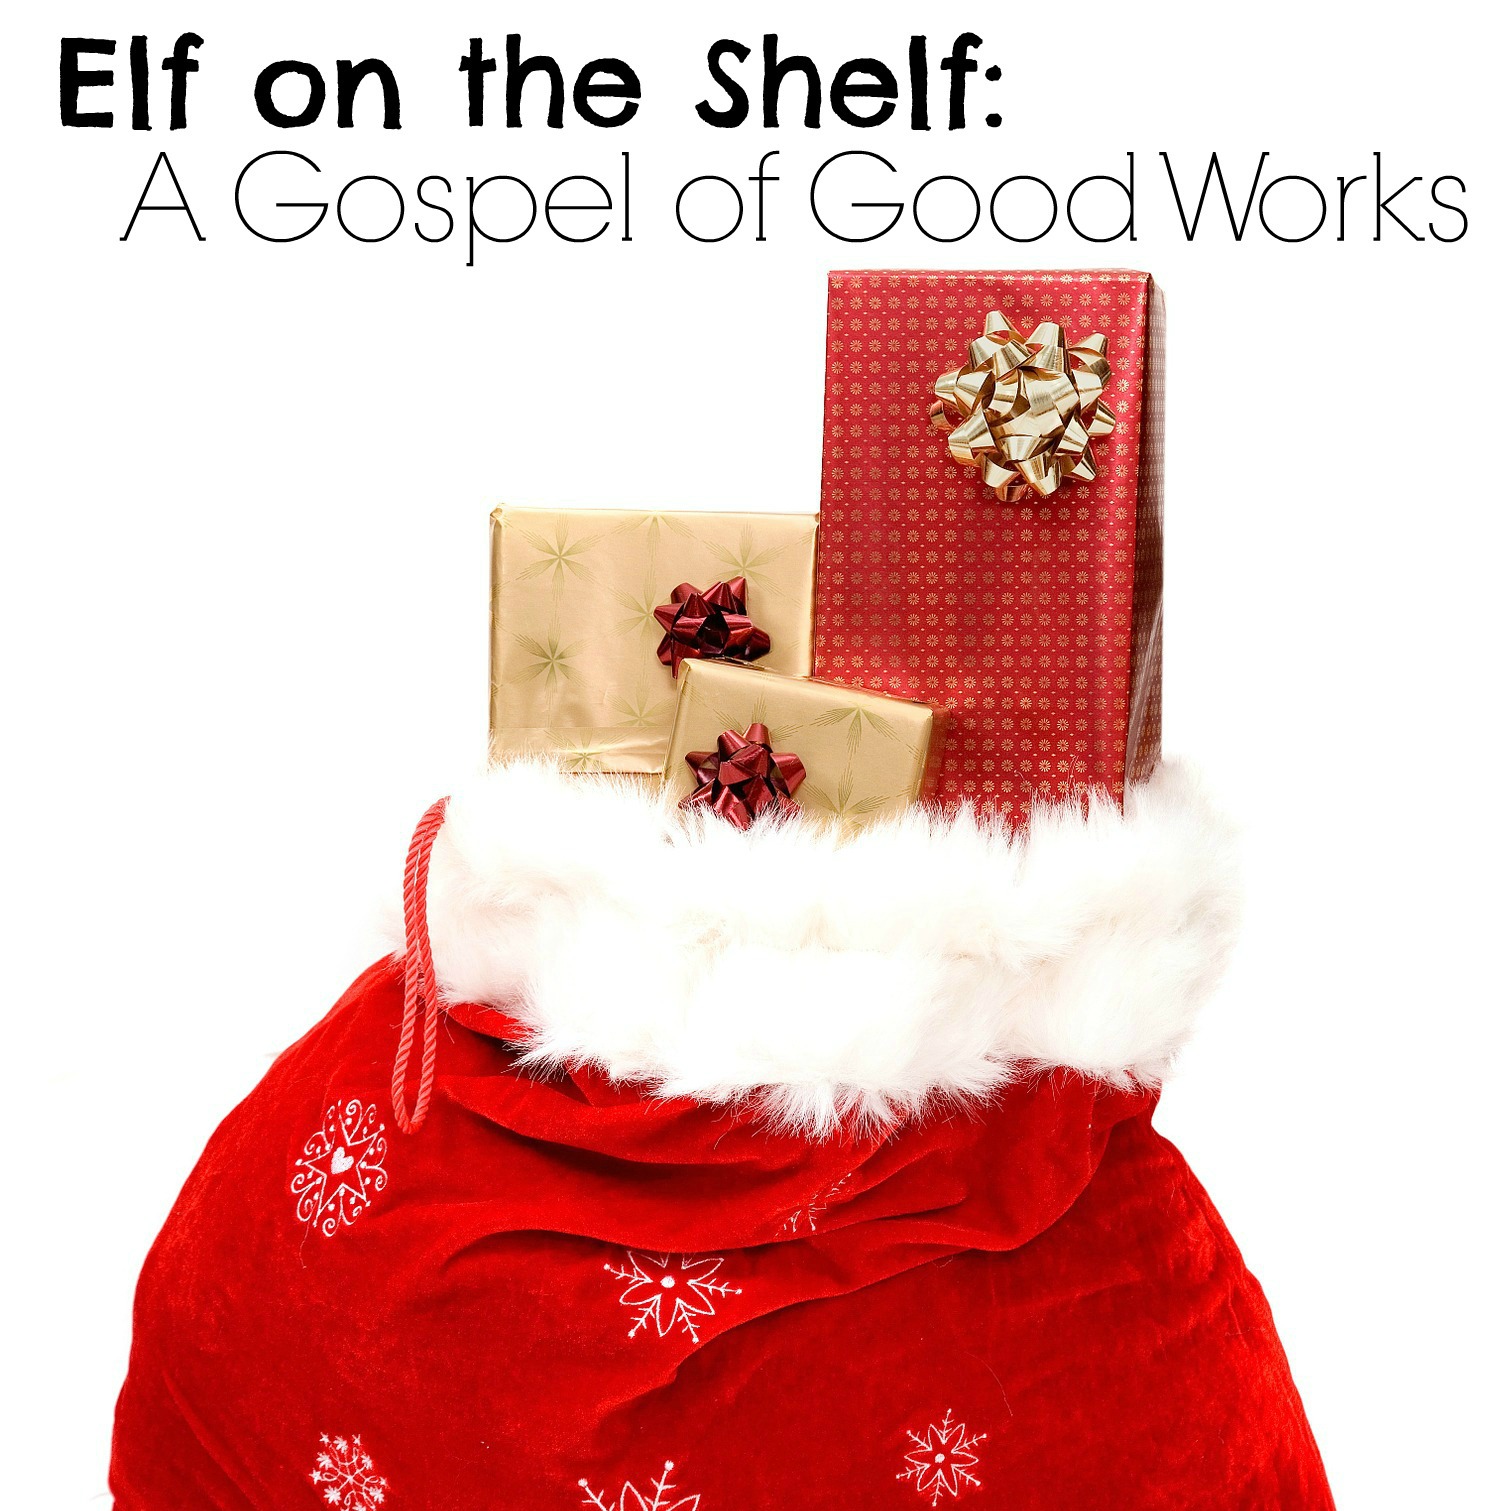 Elf on the Shelf: A Gospel of Good Works